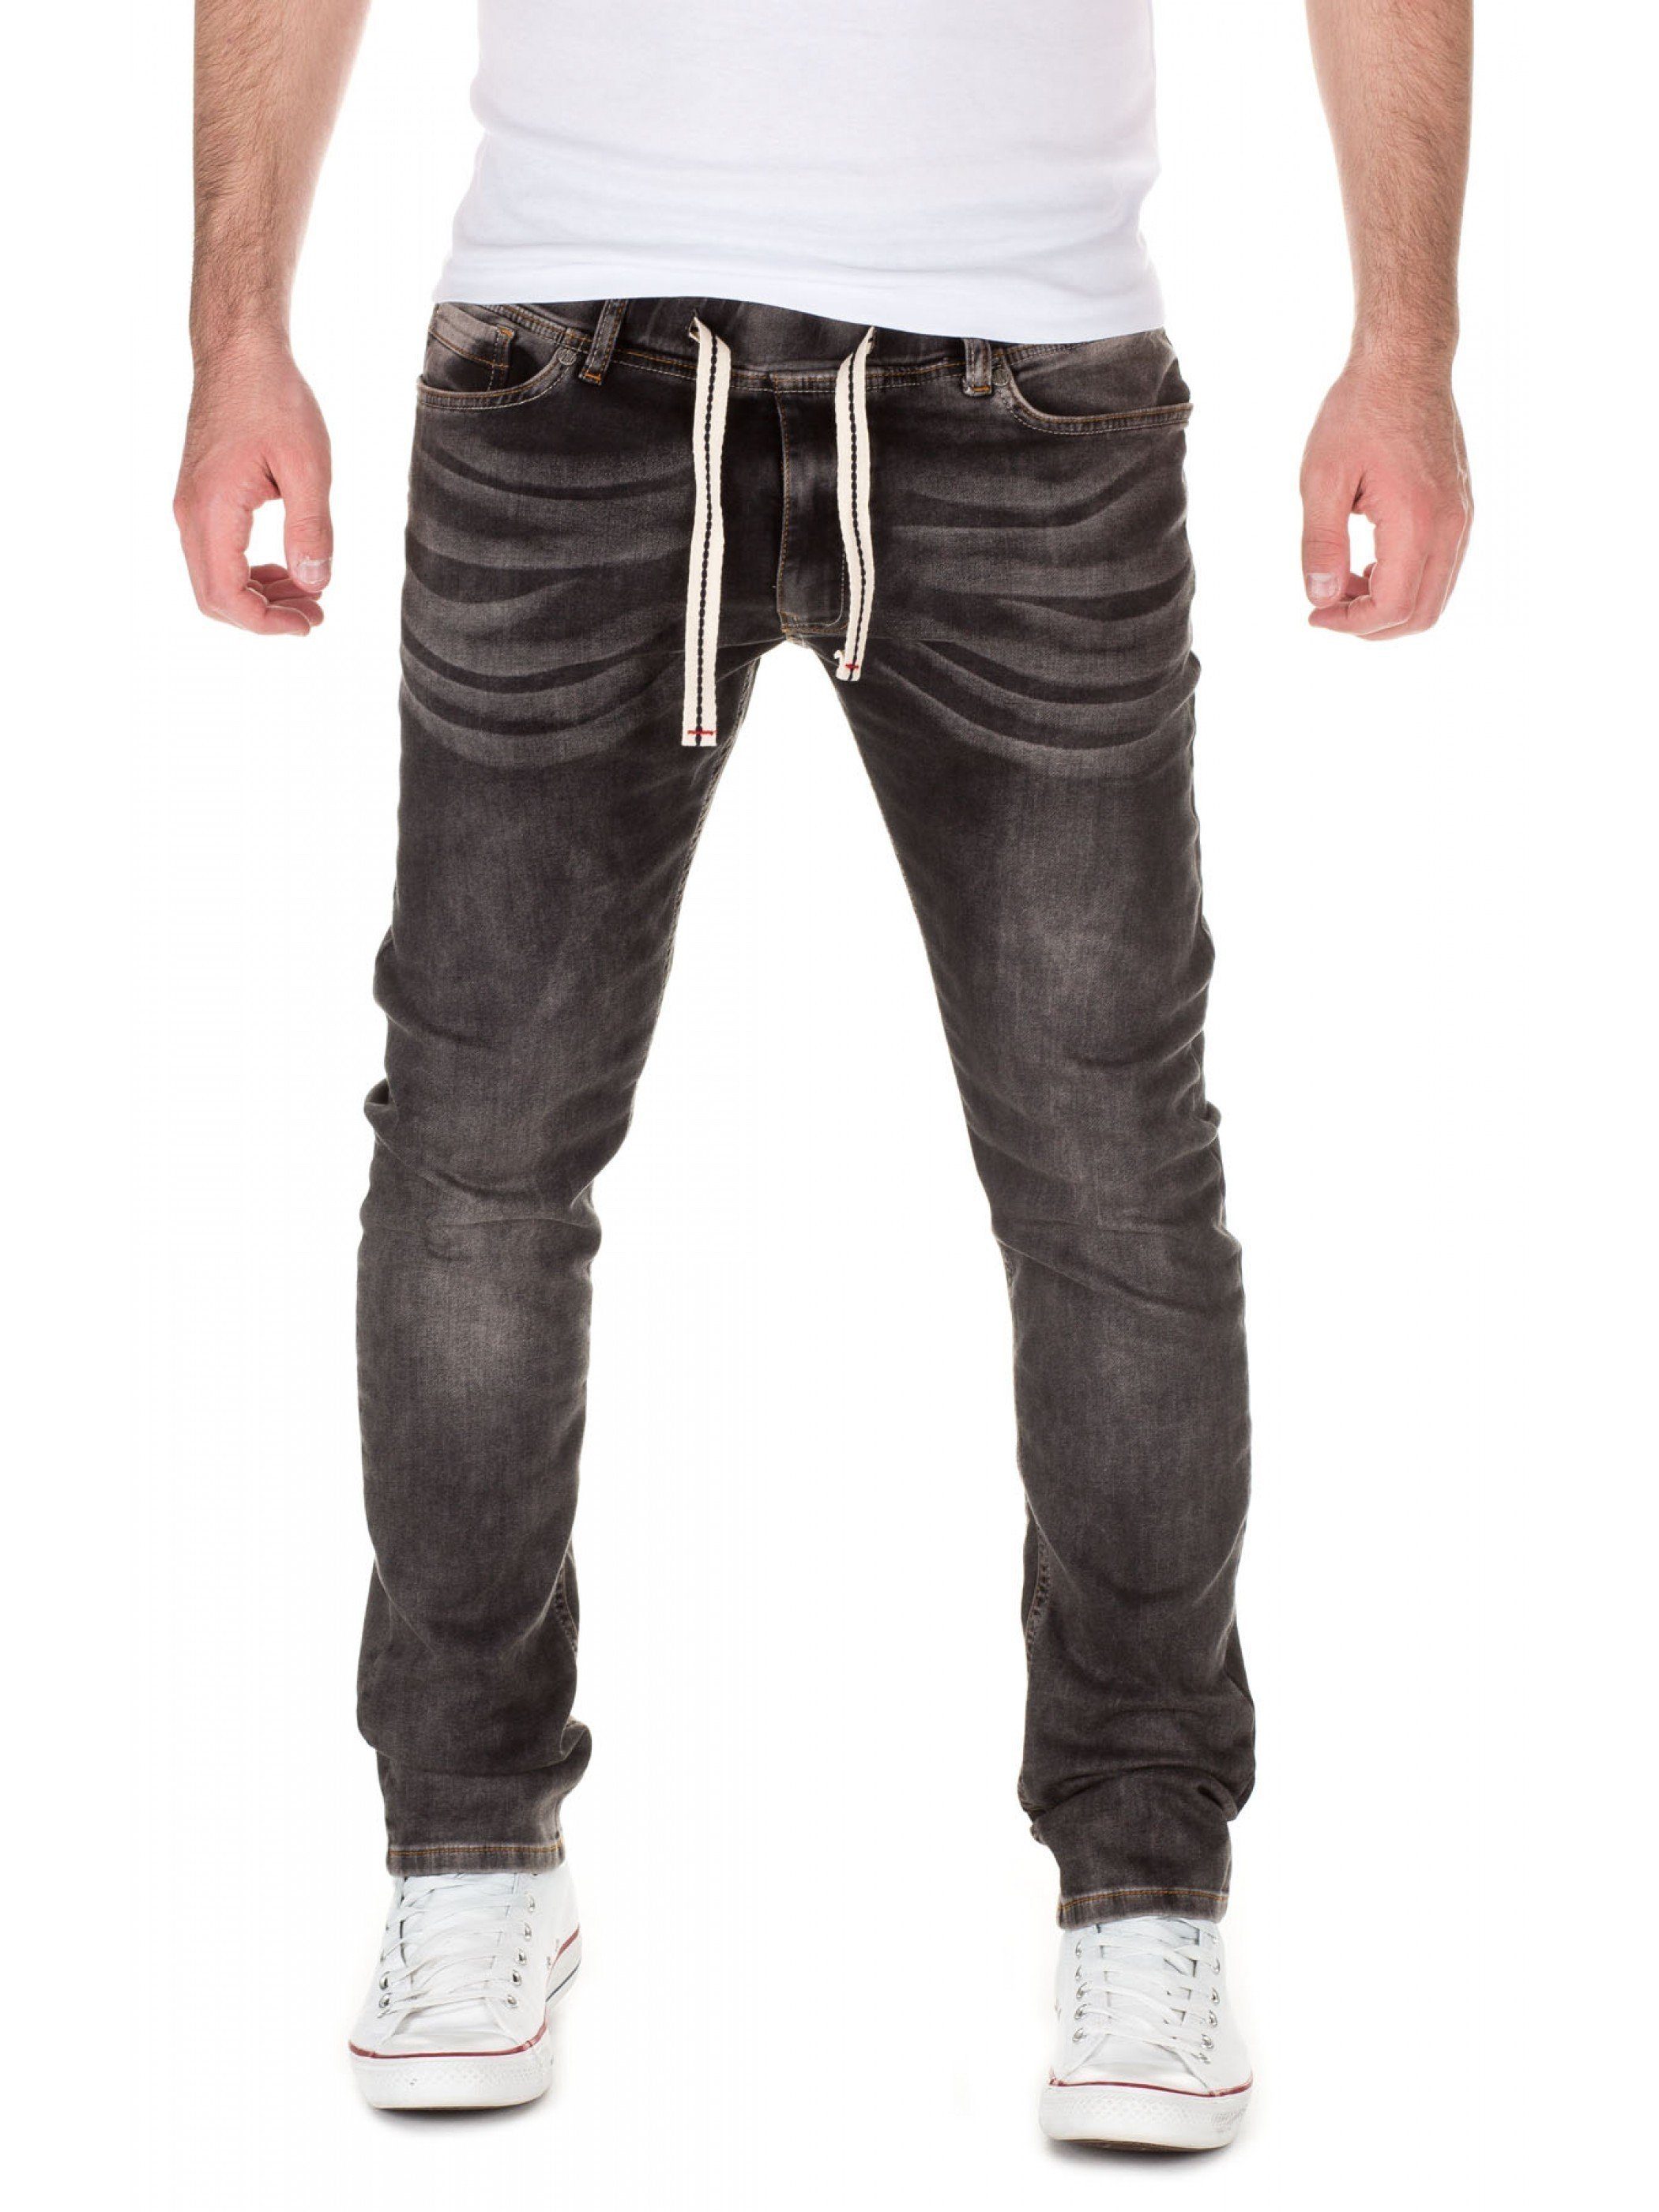 Jeans, in Jeansoptik Schmale 4020) mit Herren Slim-fit-Jeans Yazubi Blau Stretch-Anteil Sweathose Rick shadow (blue